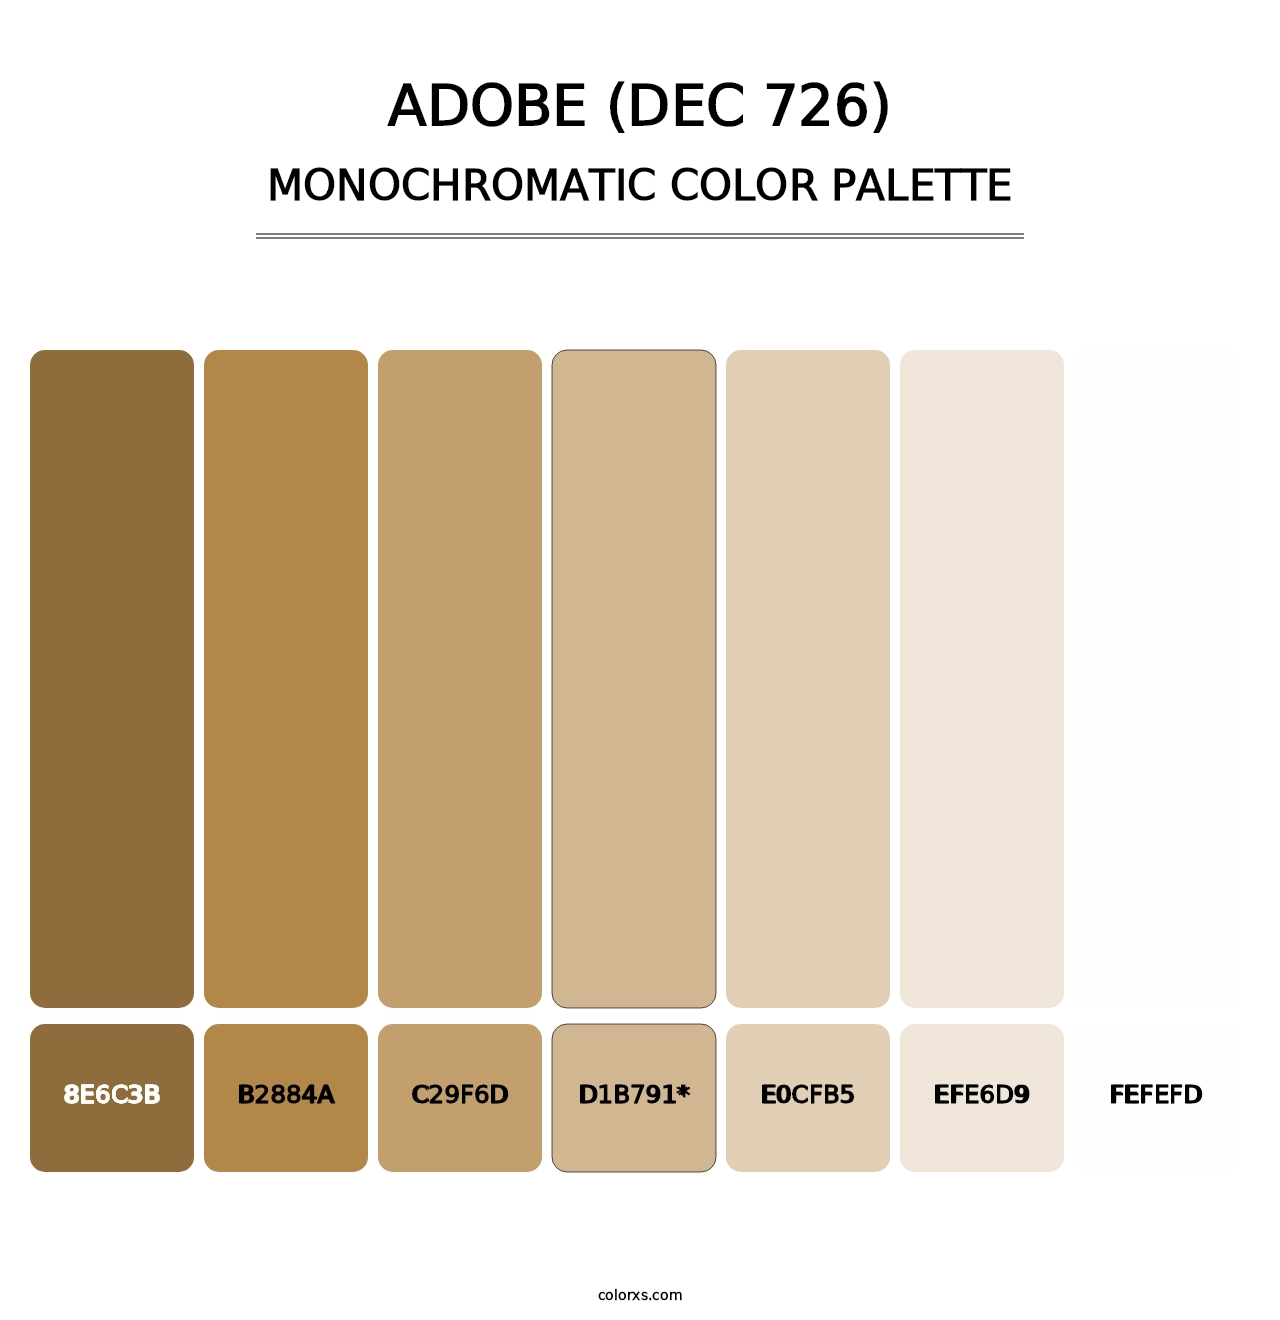 Adobe (DEC 726) - Monochromatic Color Palette